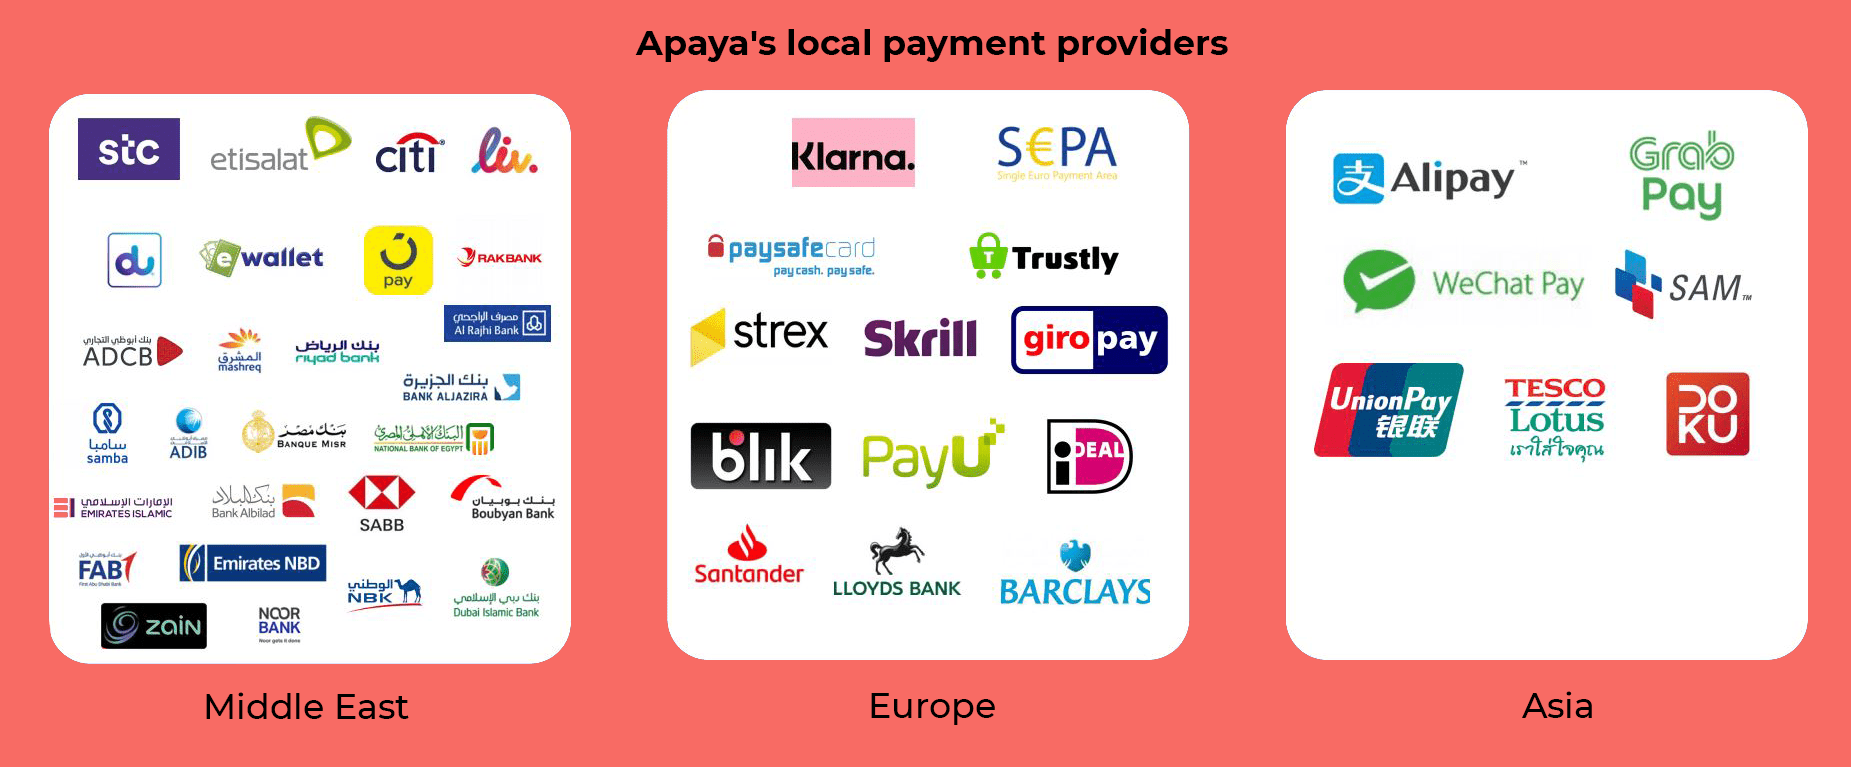 Apaya's local payment providers